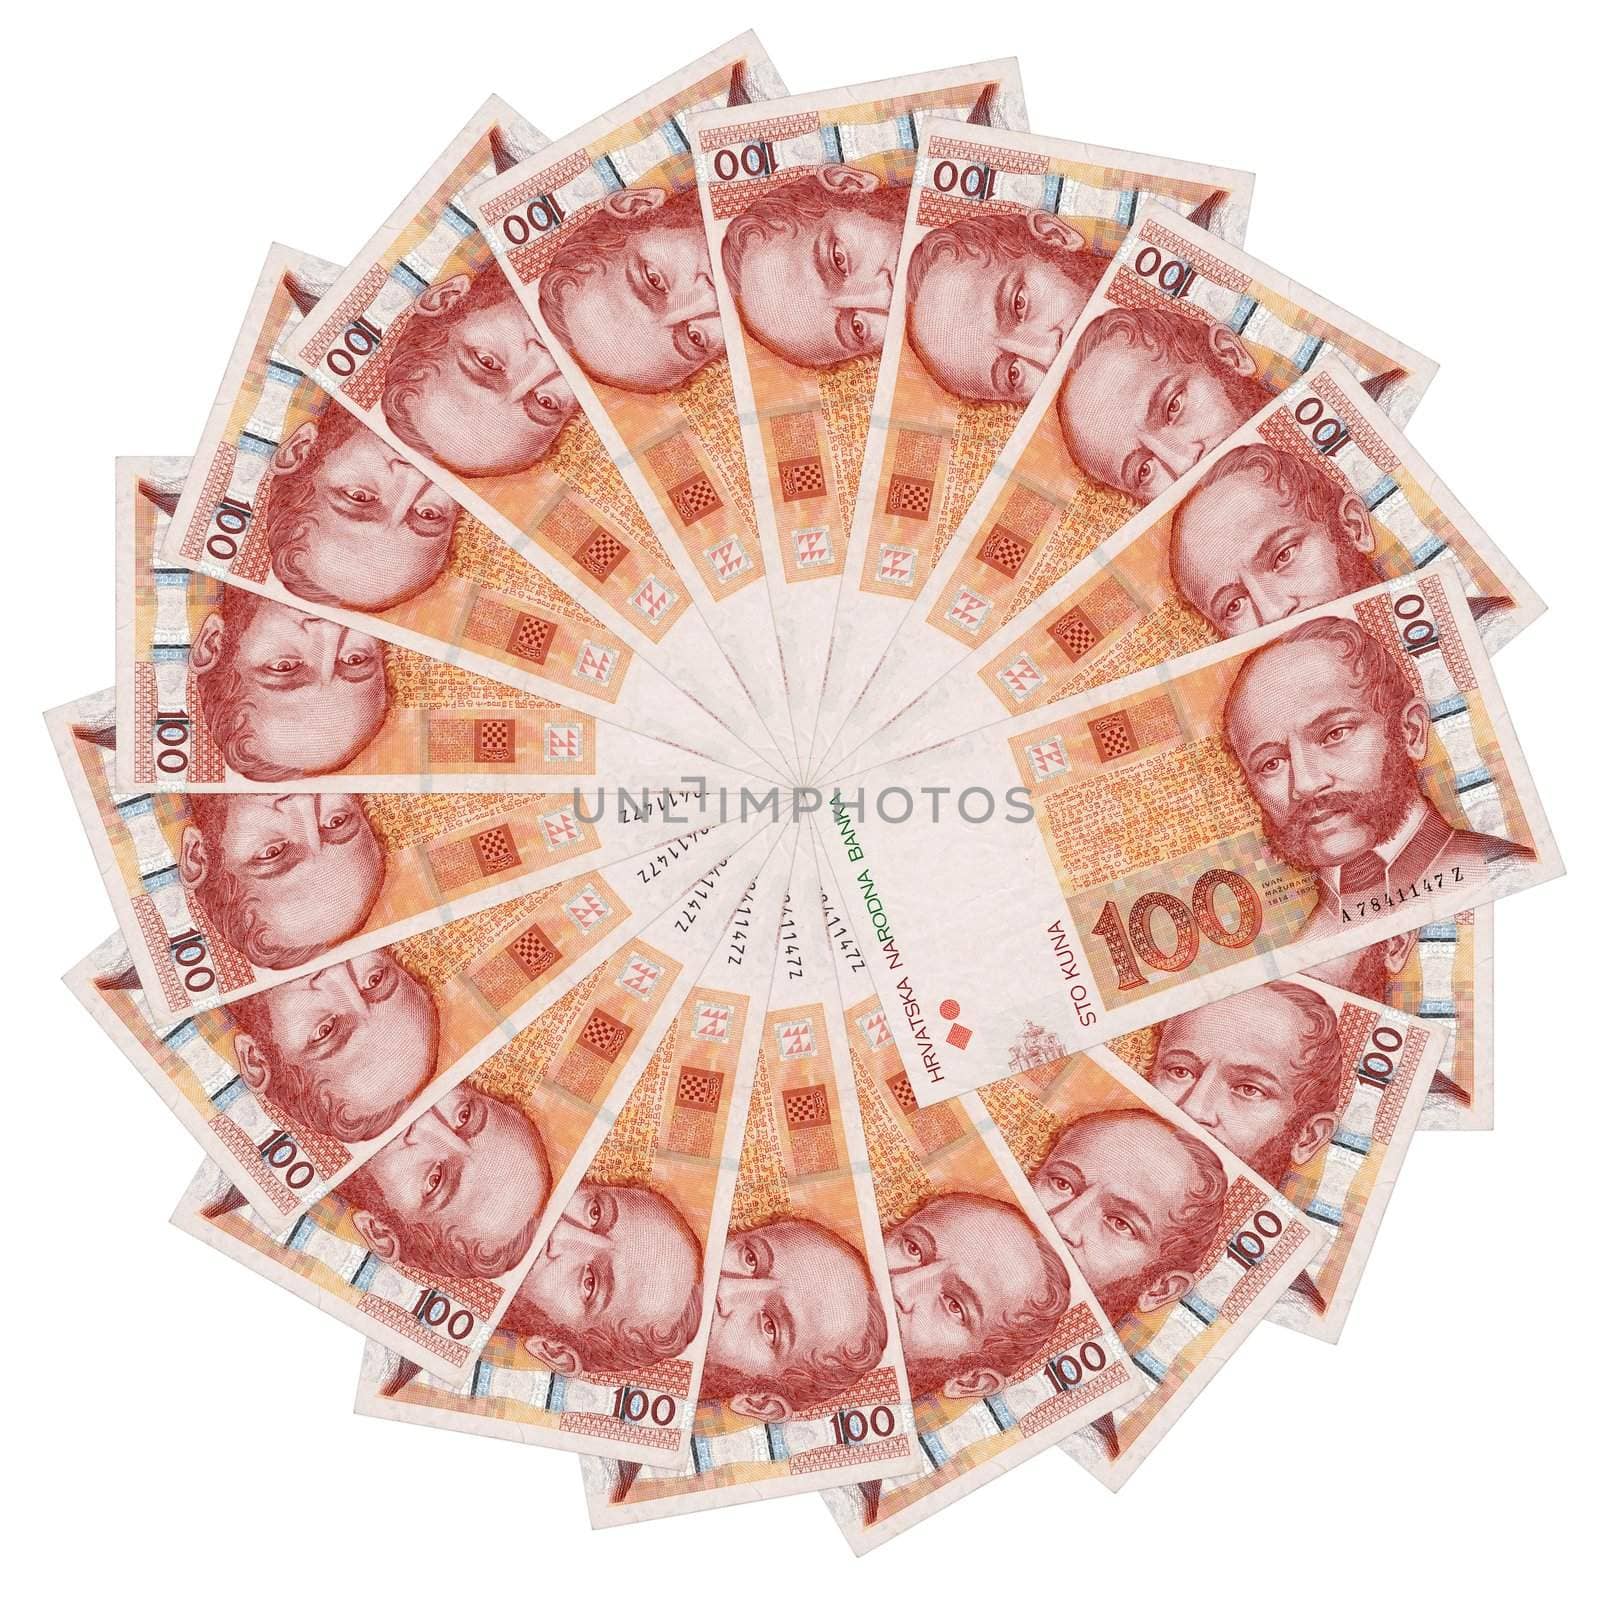 Croatian bank note in circle